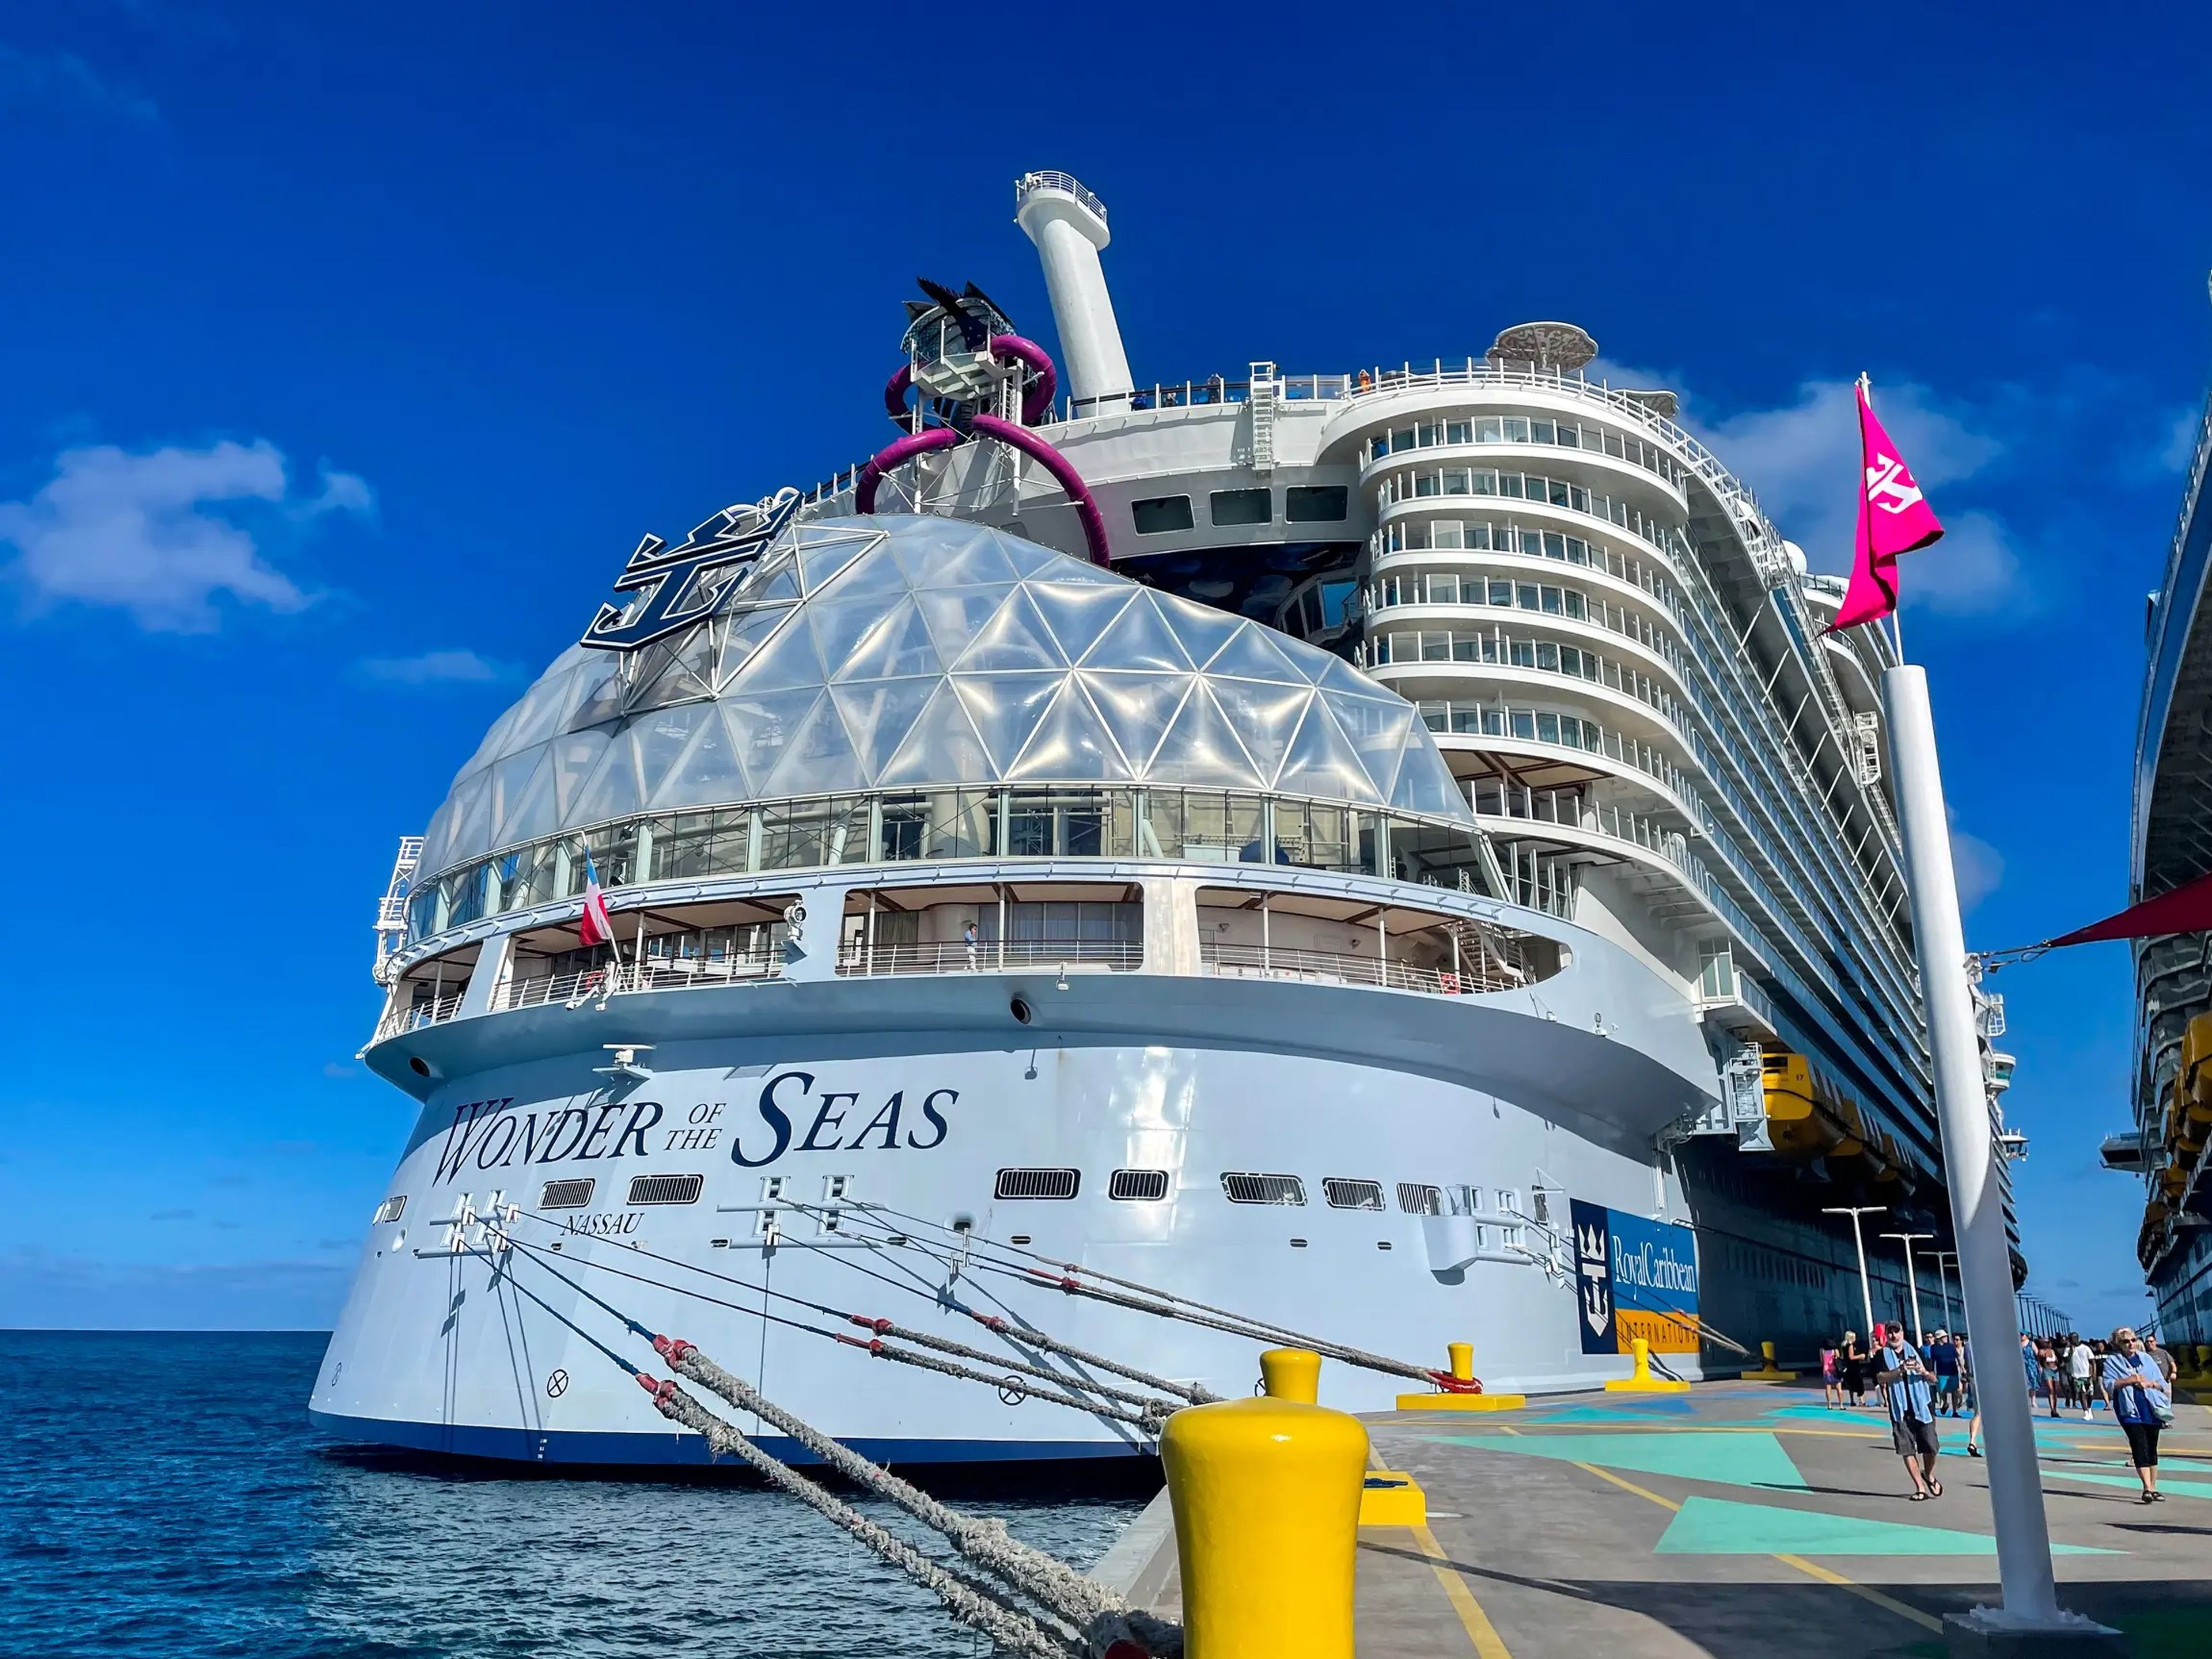 Royal Caribbean Wonder of the Seas cruise ship